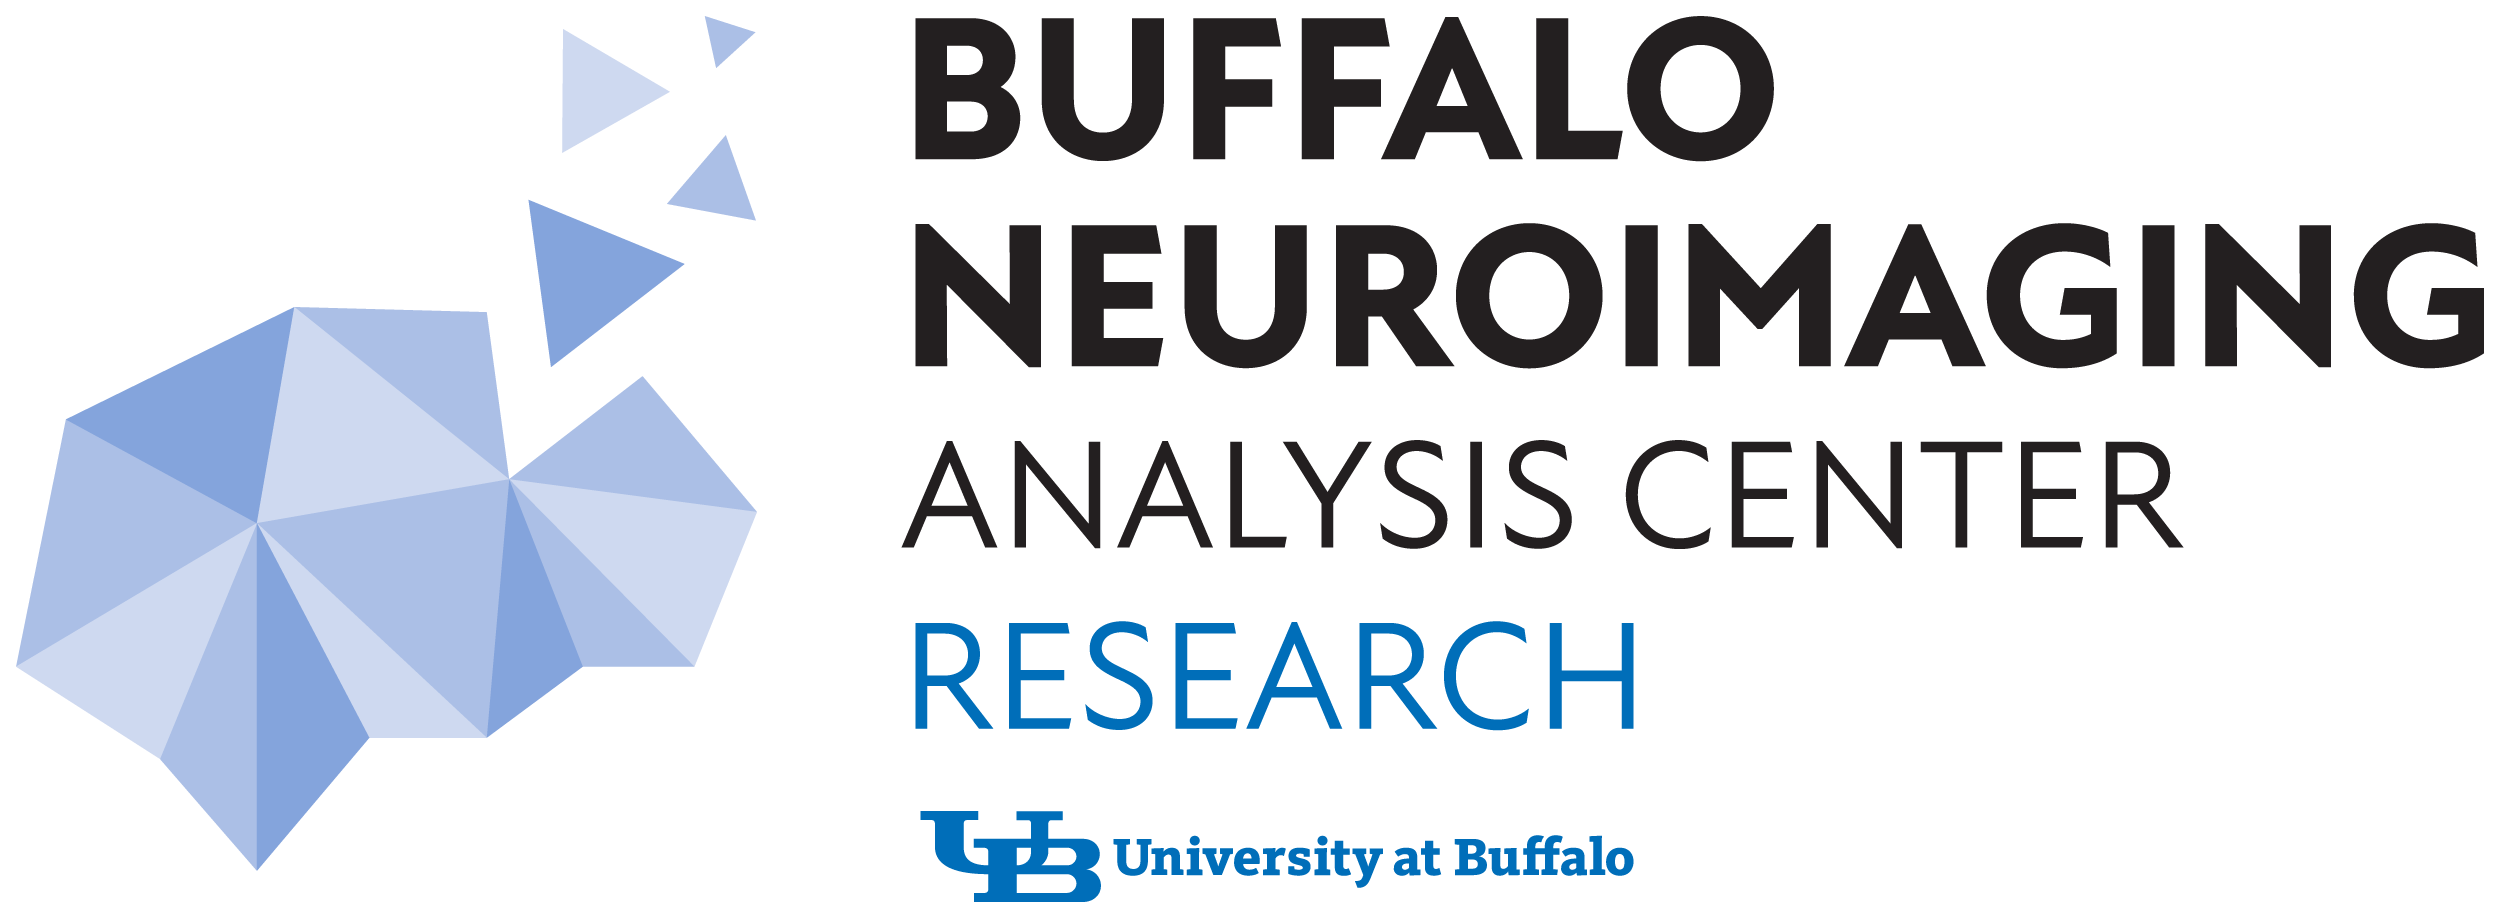 Expanded UB Neuroimaging Analysis Center Unveiled at Buffalo General Hospital Image